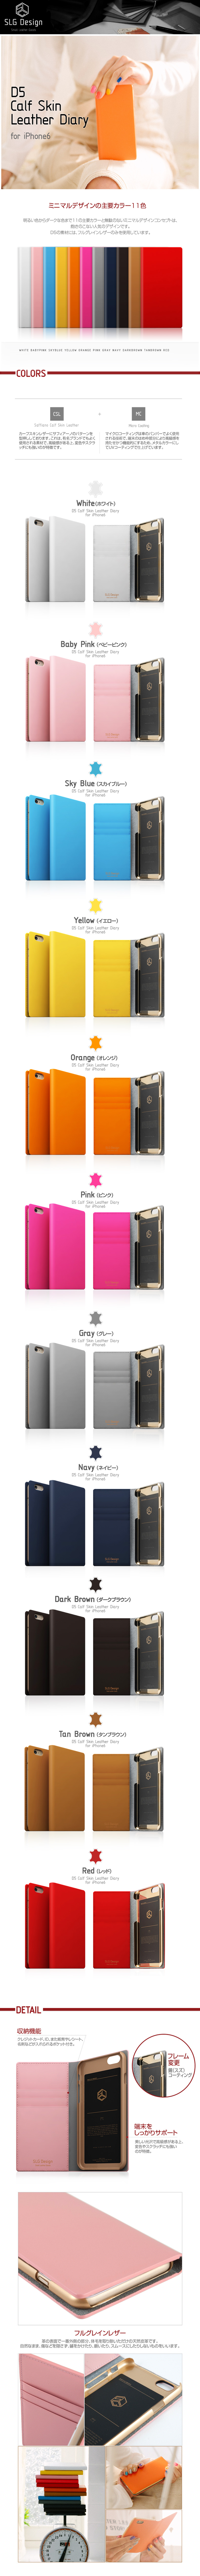 【iPhone6 ケース】SLG Design D5 Calf Skin Leather Diary